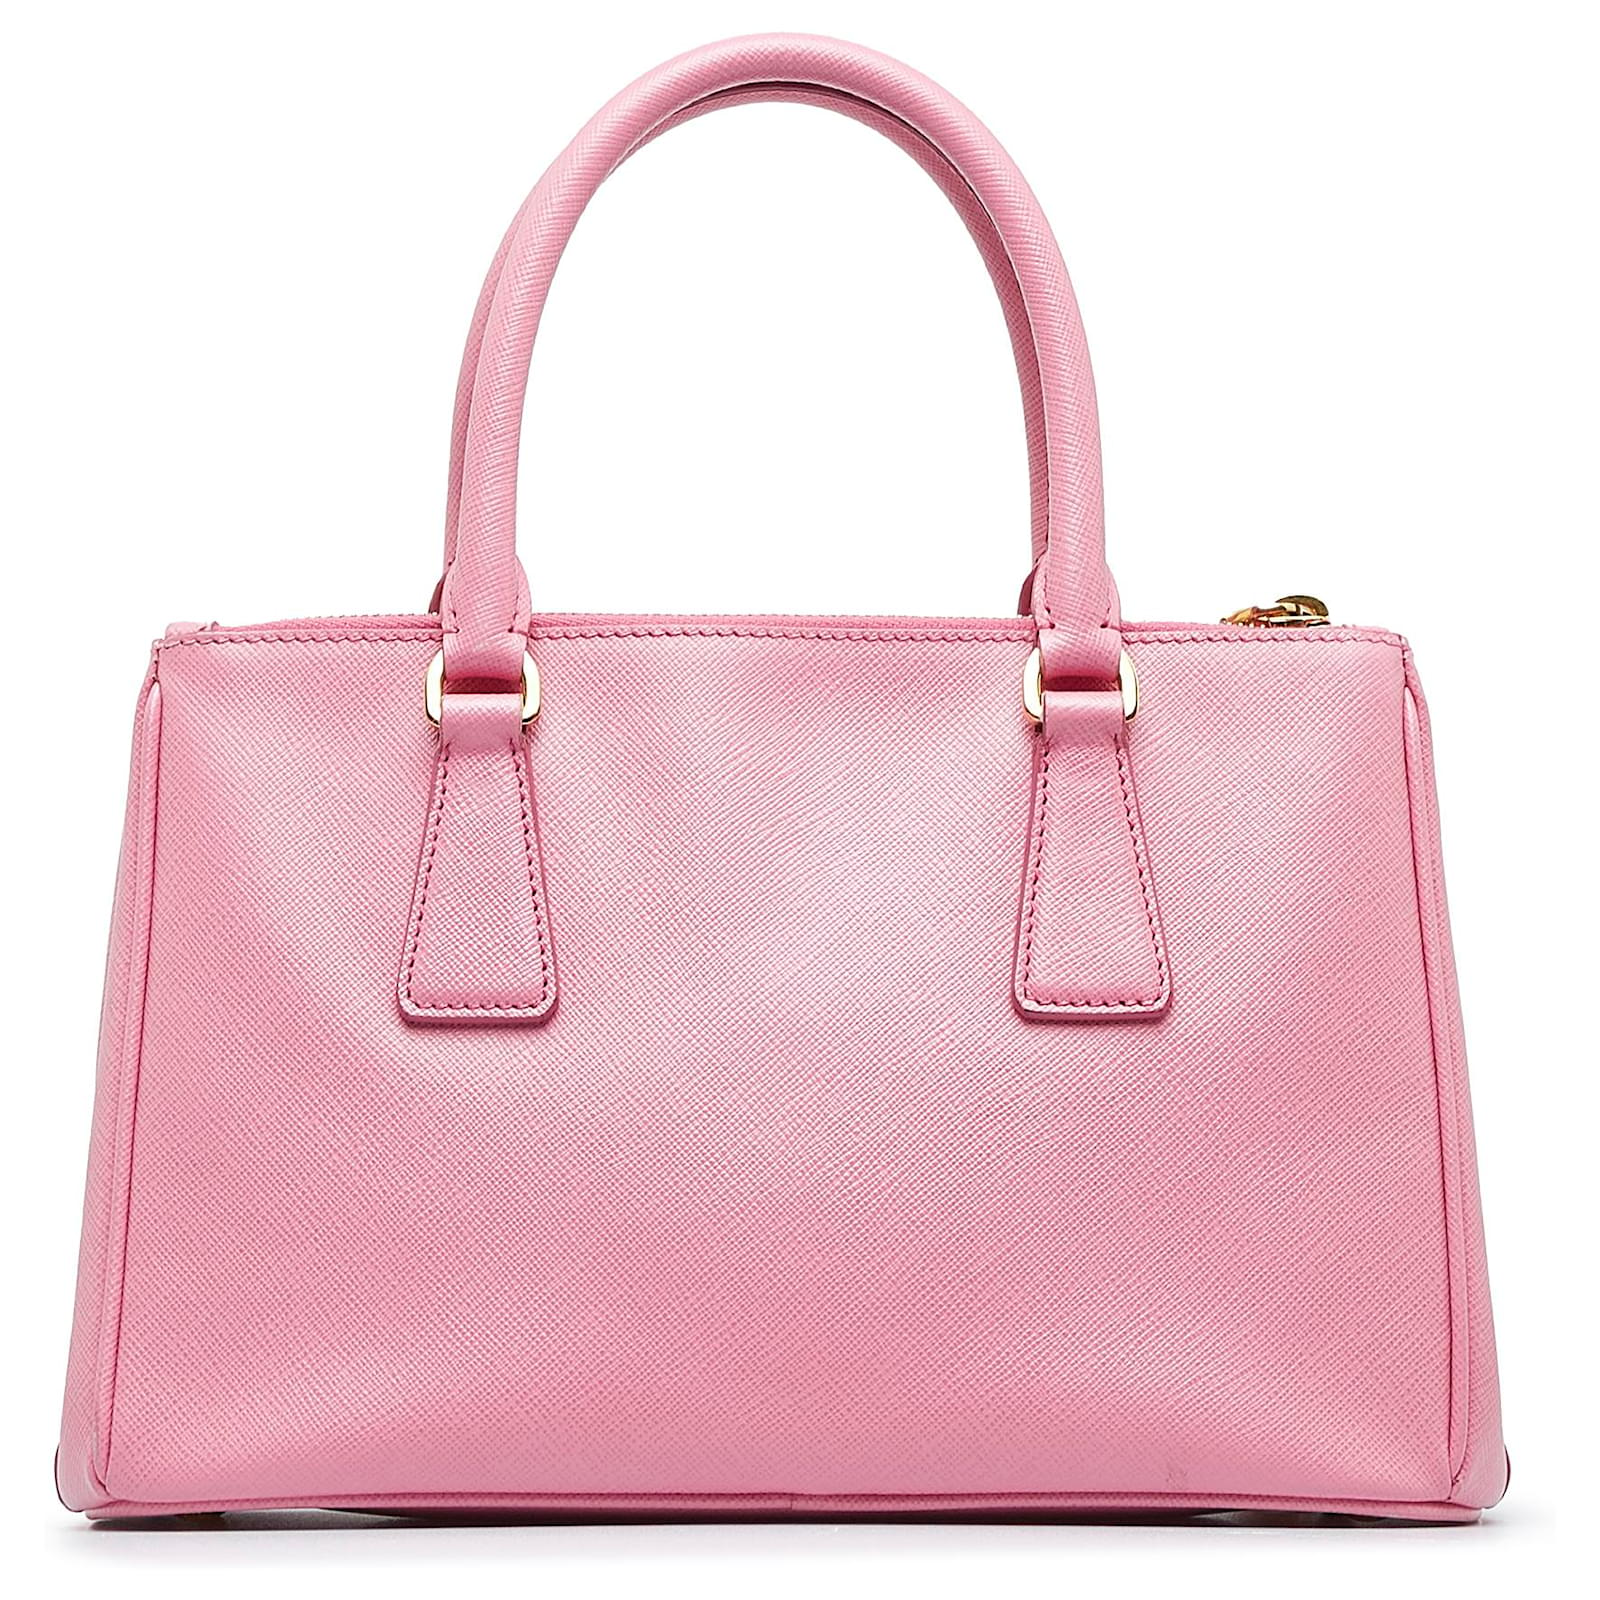 Prada Pink Small Saffiano Galleria Double Zip Leather Pony-style